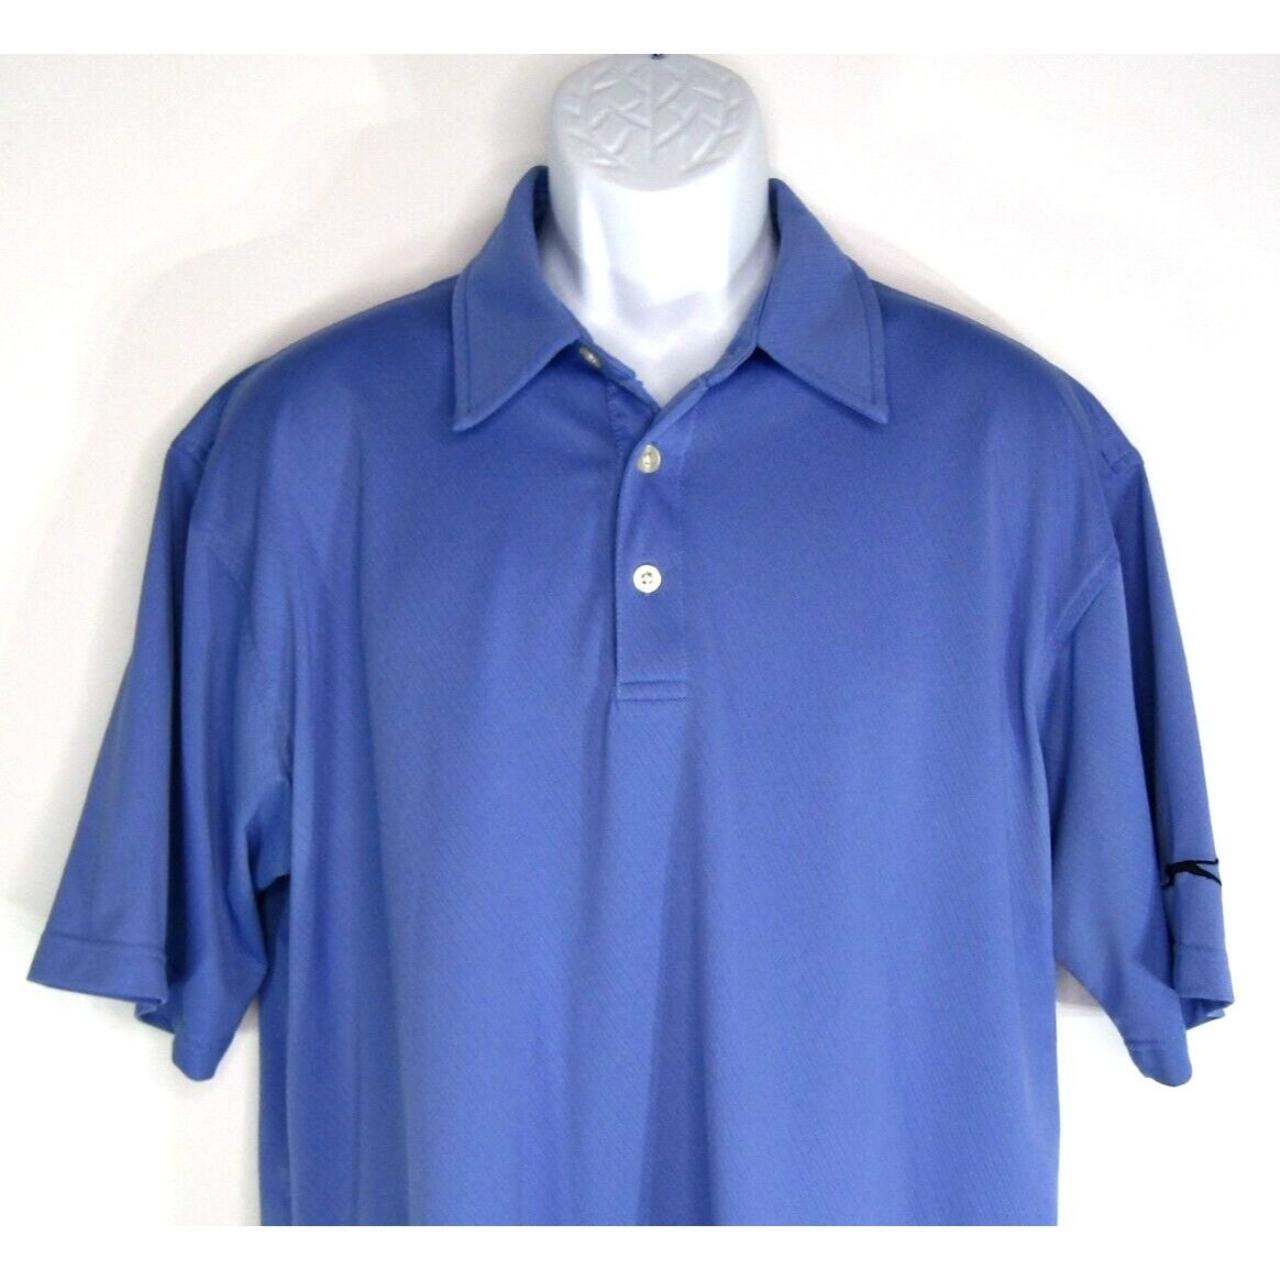 Slazenger Golf Shirt | old.kaminakoda.ee